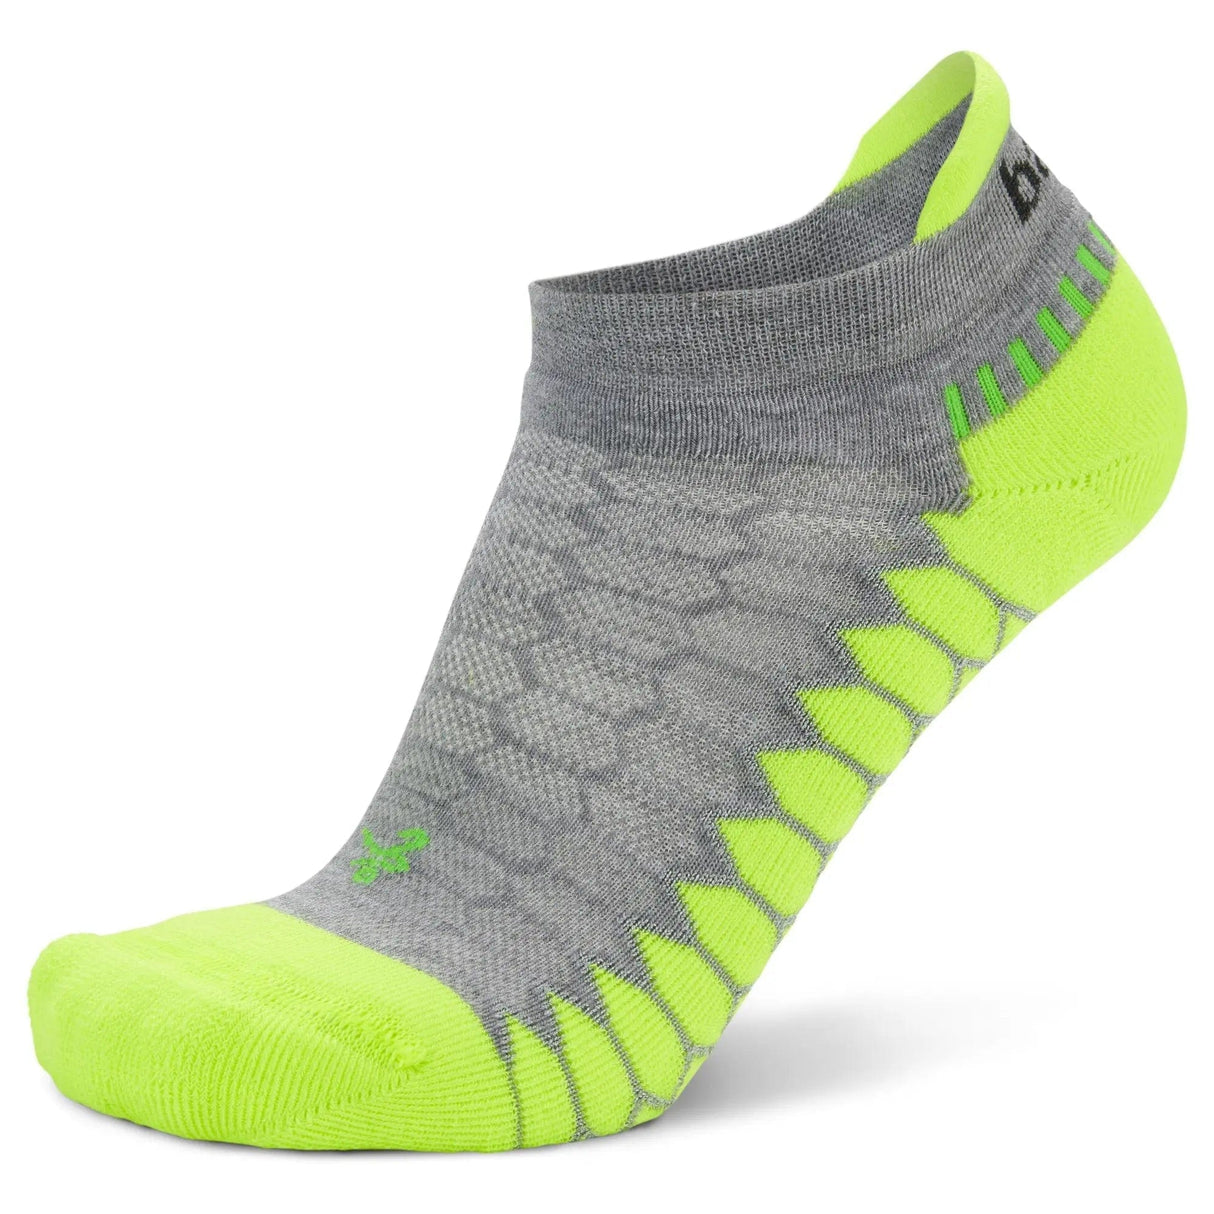 Balega Silver No Show Socks - Clearance  -  Small / Midgray/Neon Lime